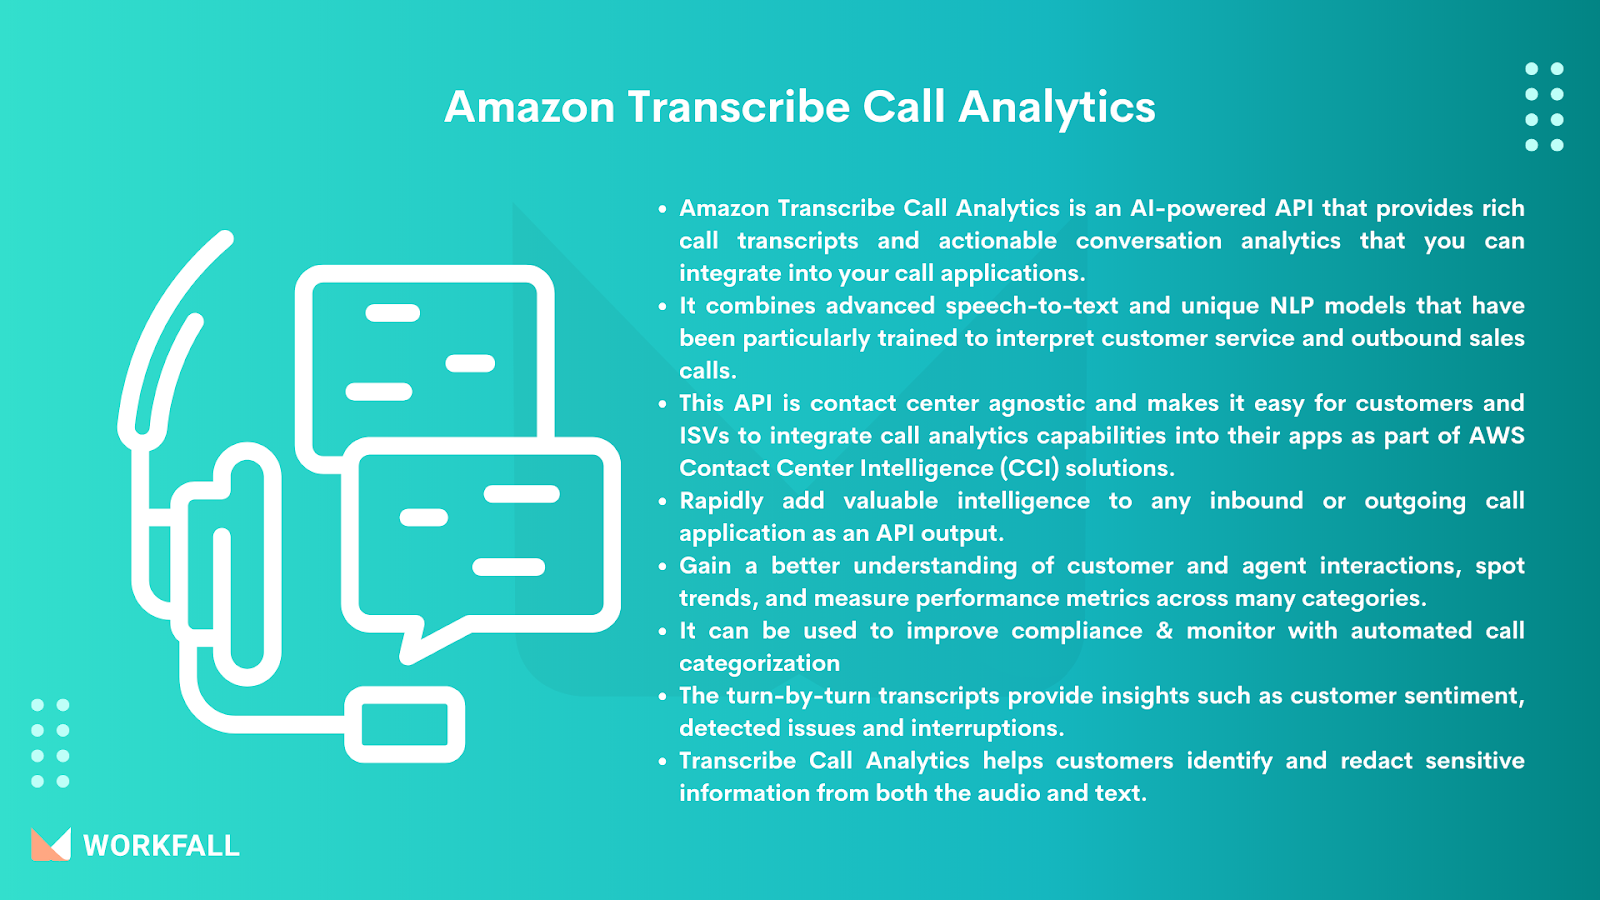 What is Amazon Transcribe Call Analytics?